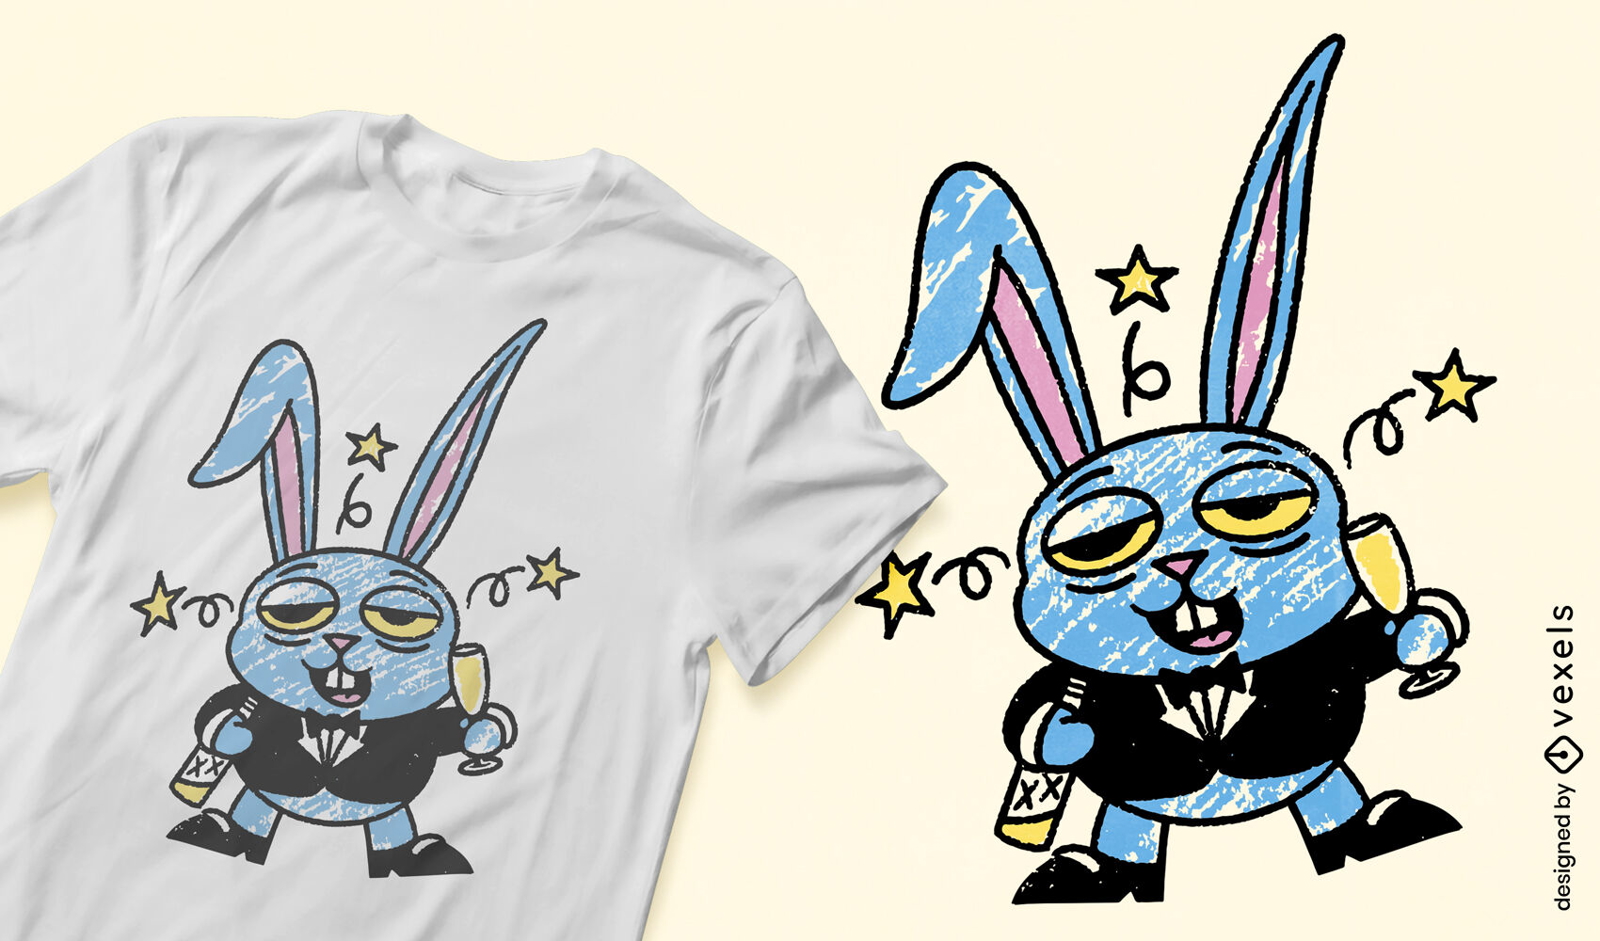 Drunk bunny doodle t-shirt design